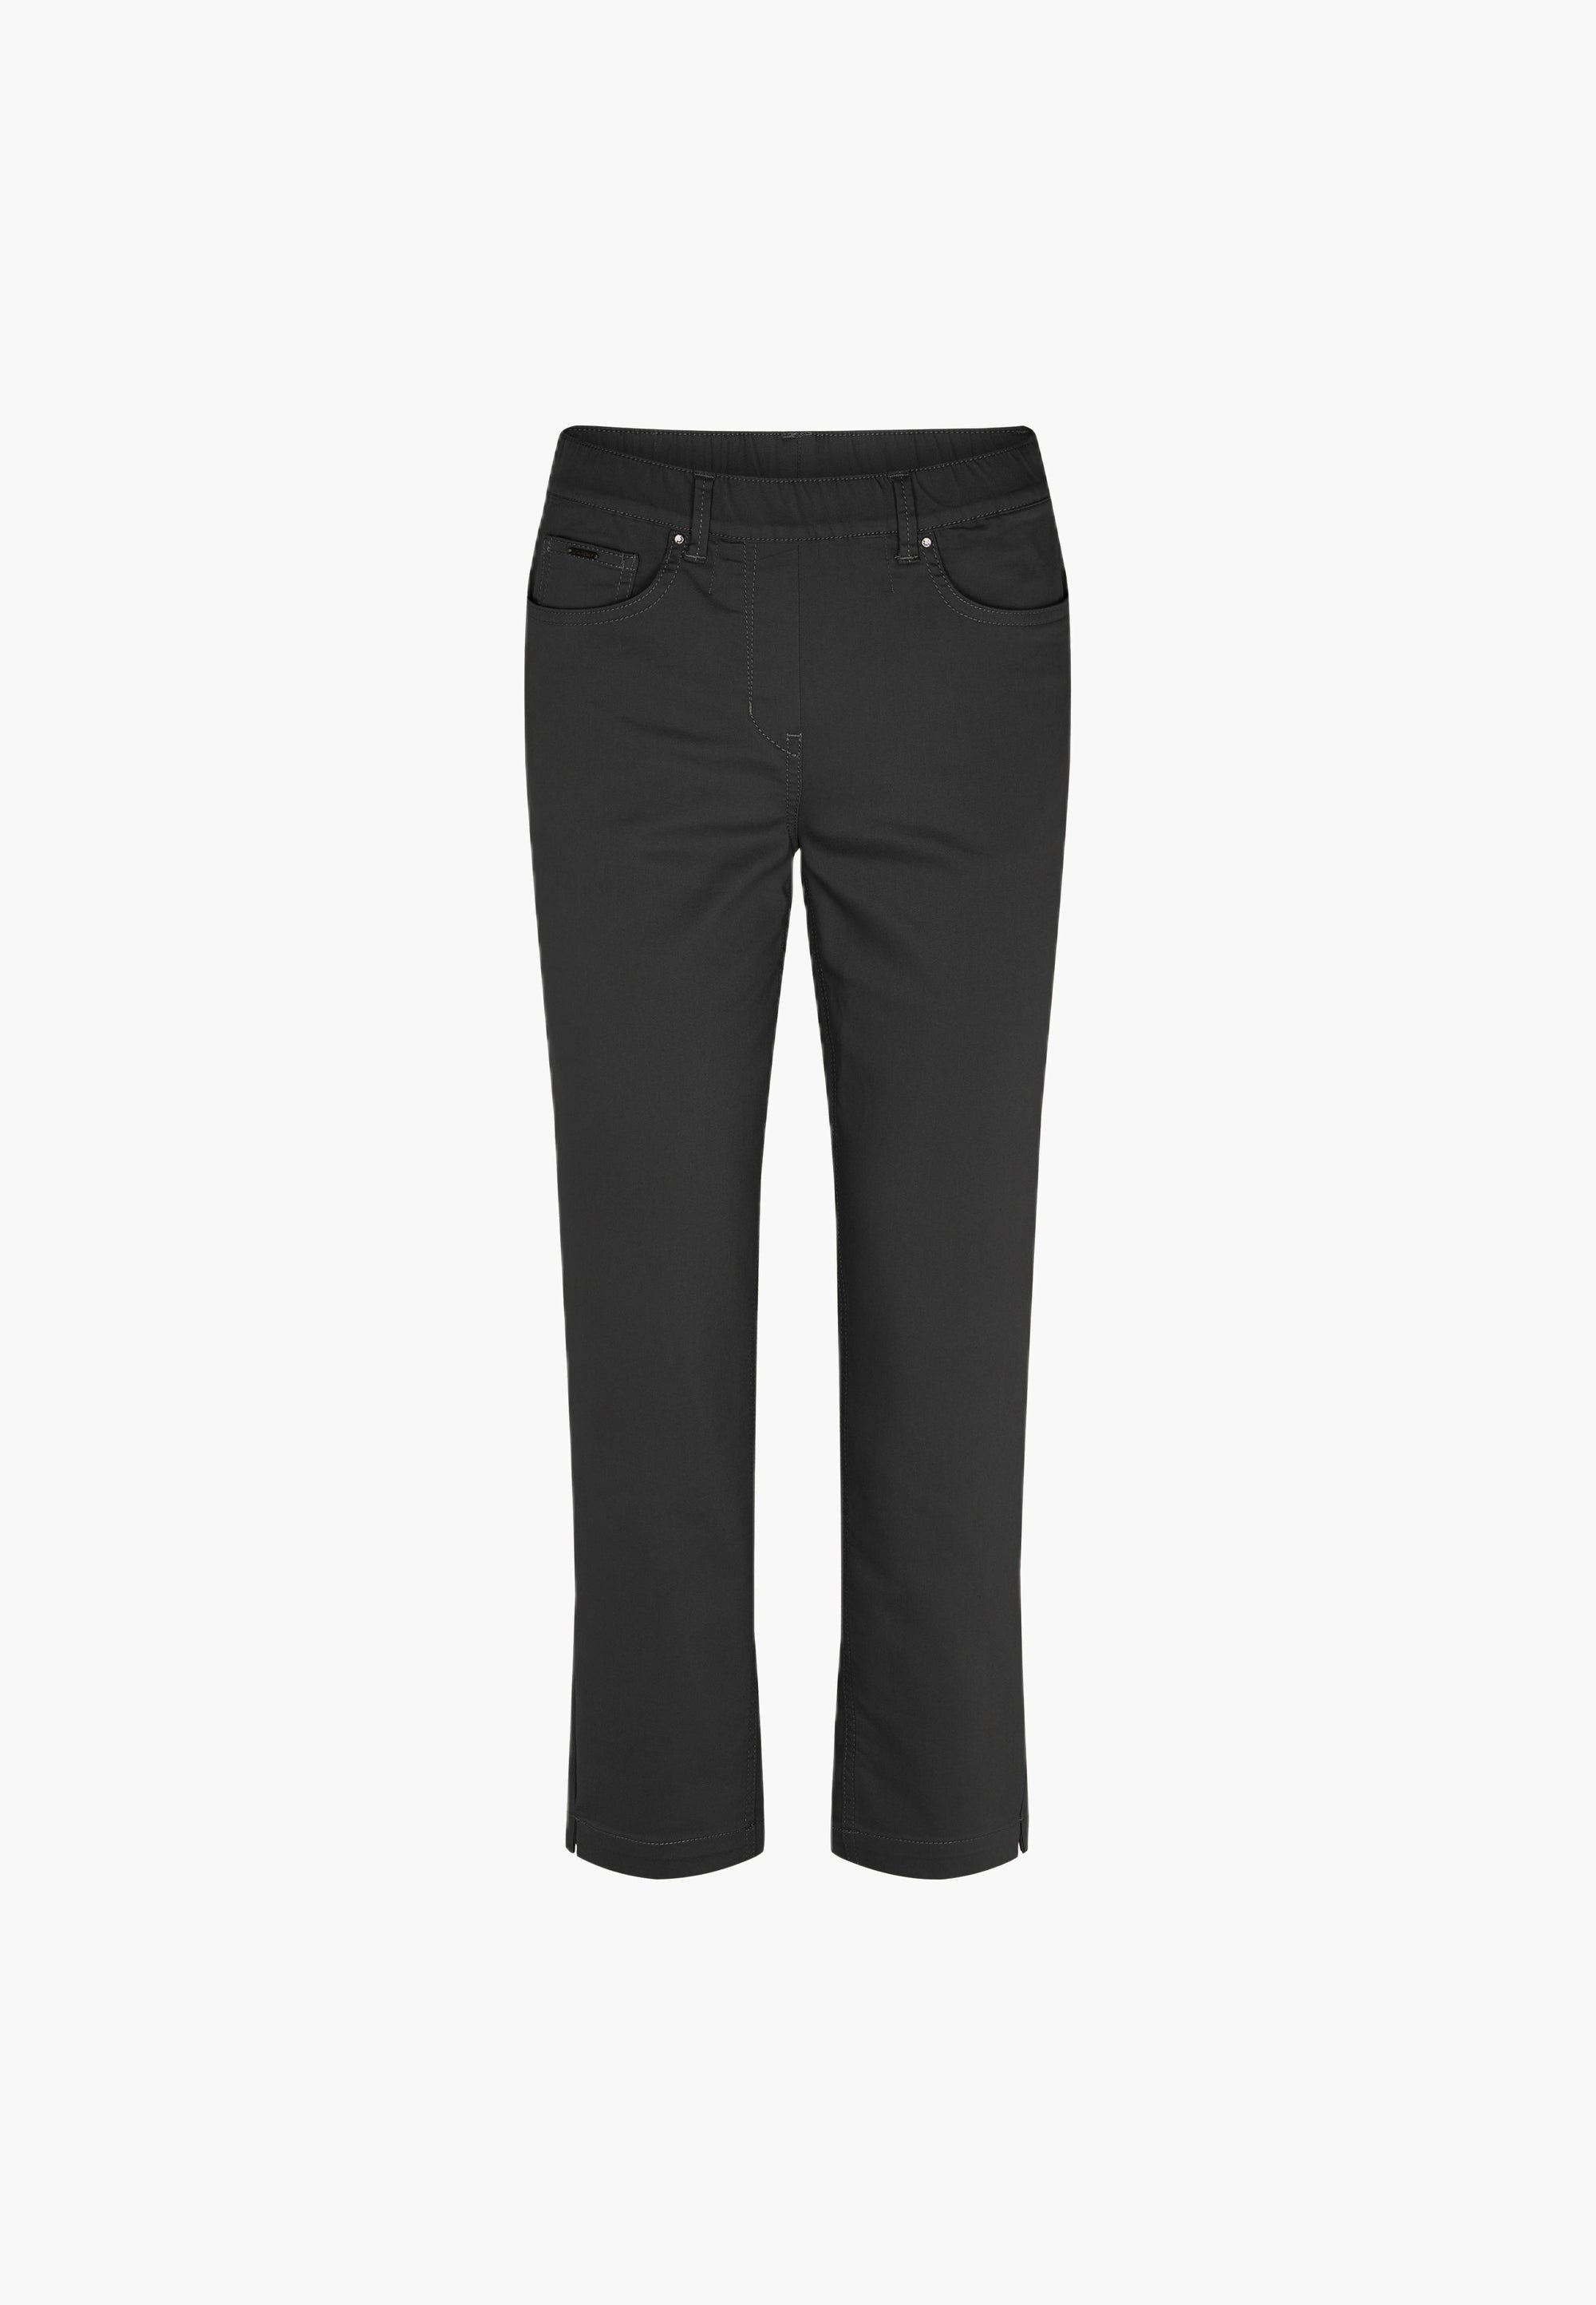 LAURIE  Hannah Regular - Extra Short Length Trousers REGULAR 99000 Black